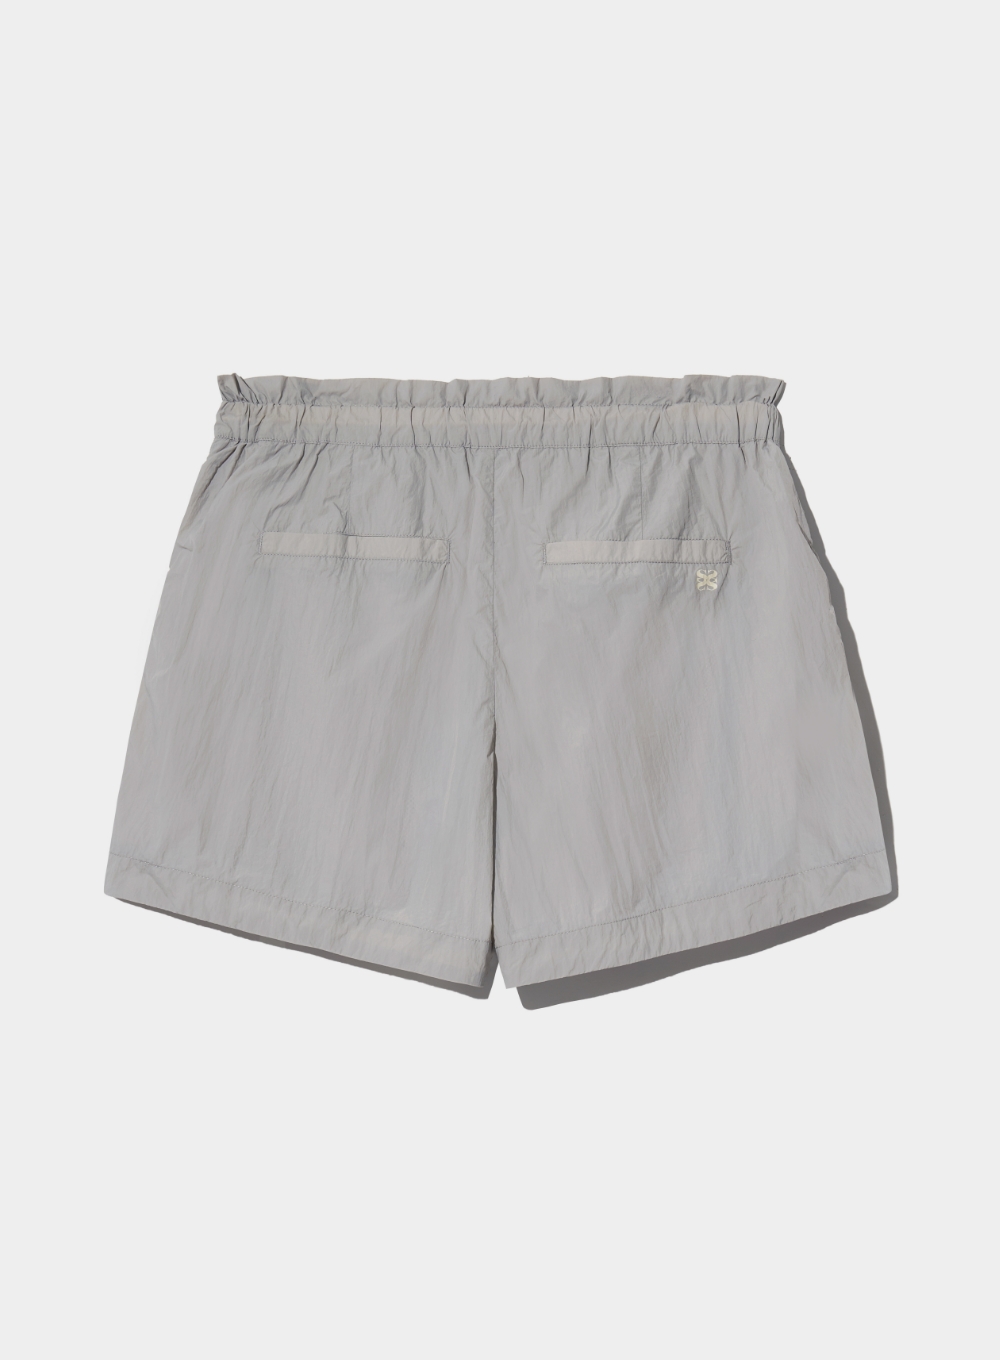 (W) Nylon shirring Flare Banding Shorts - Quiet Gray